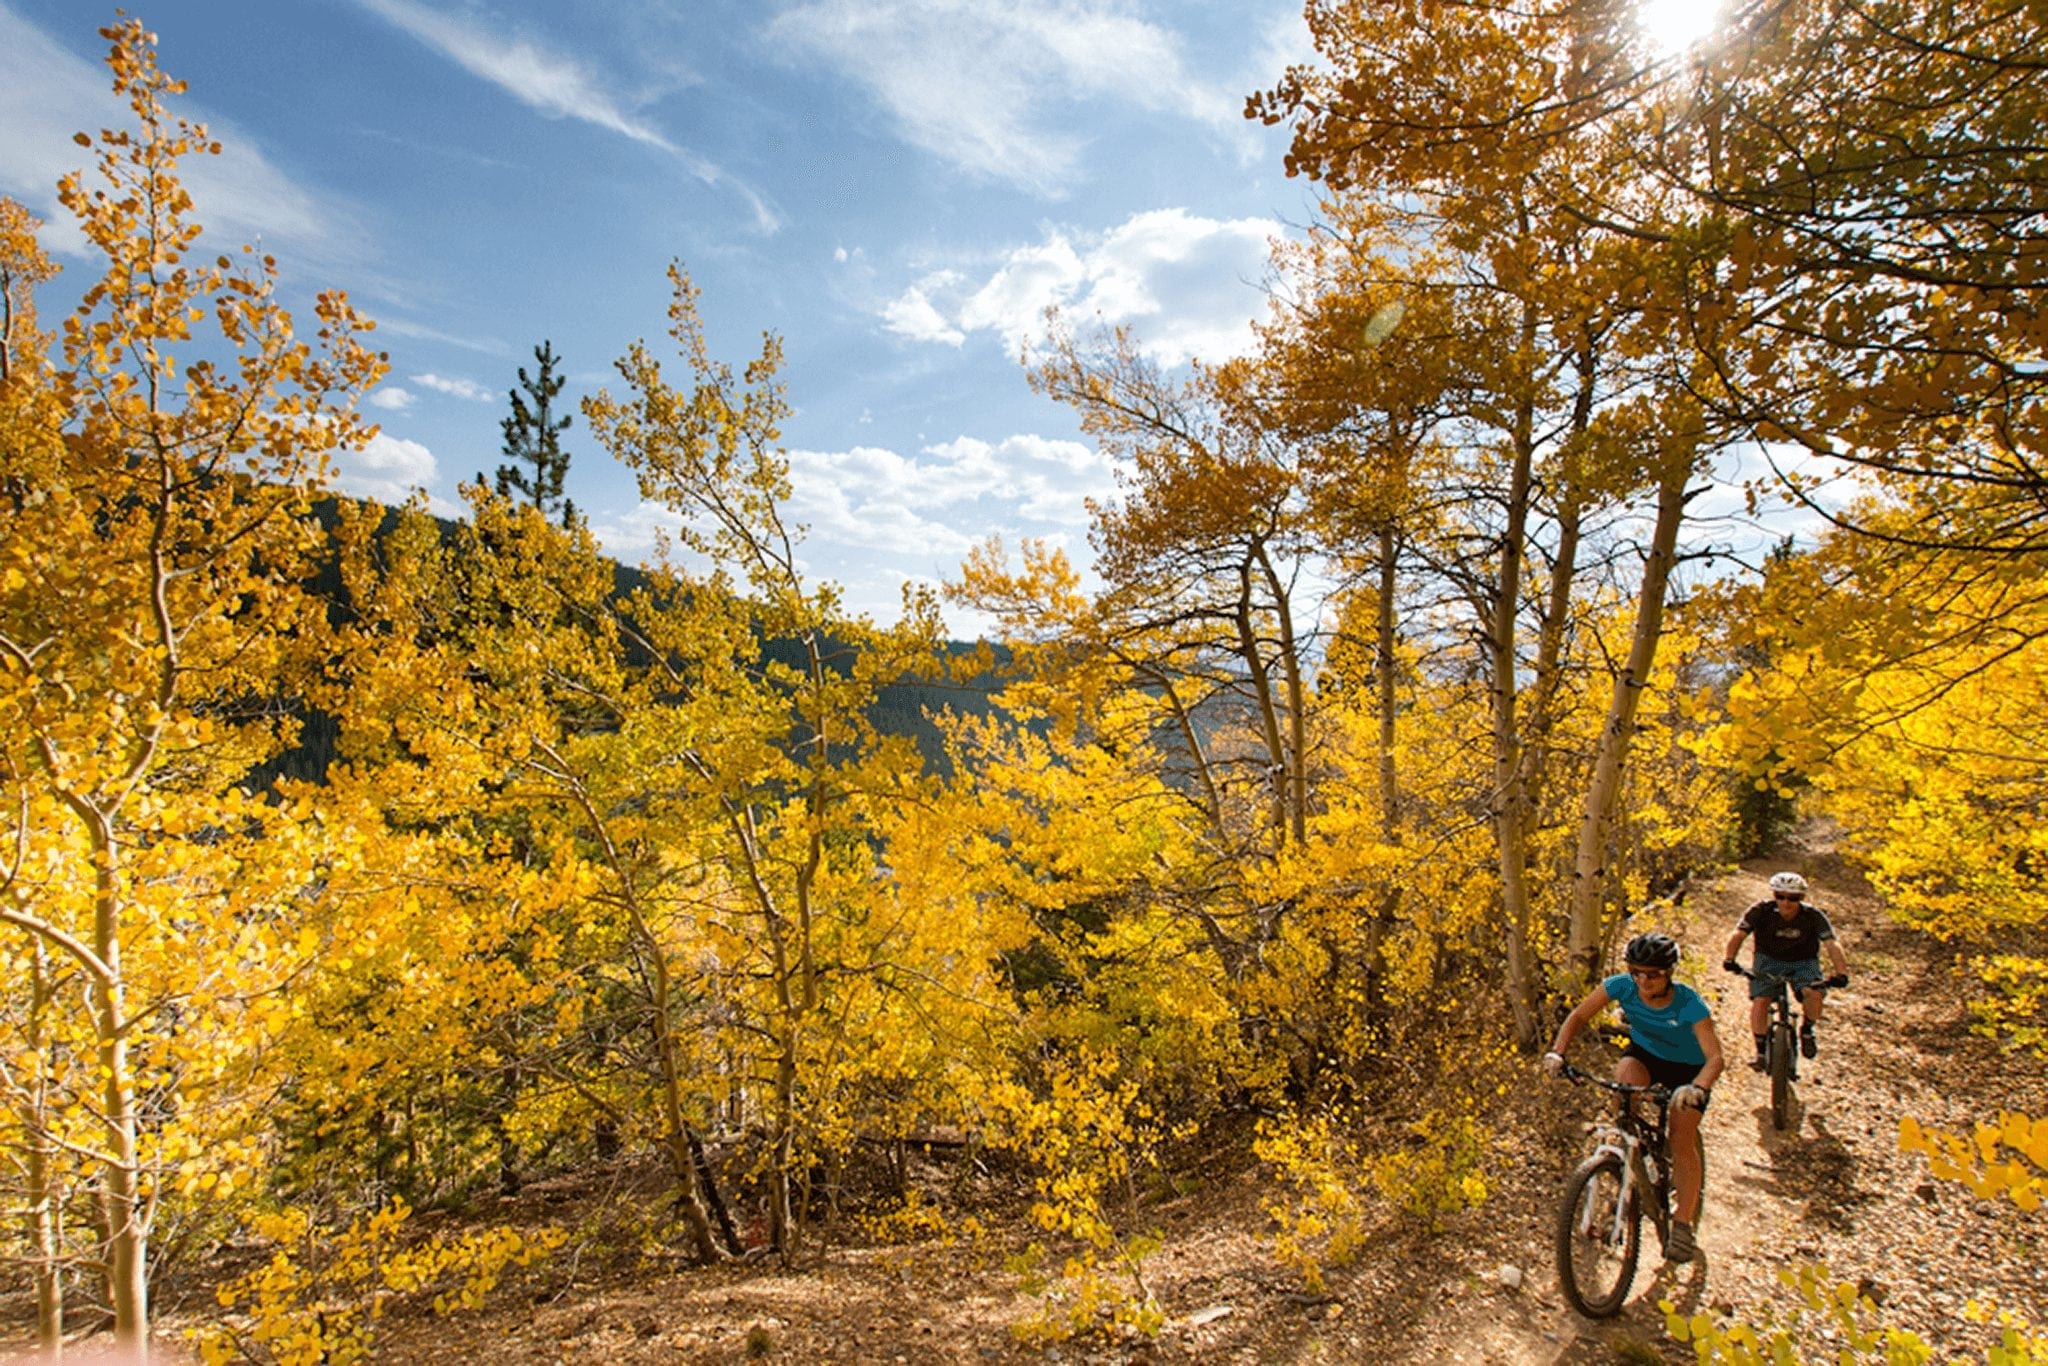 Mountain bikers amidst fall leaves in Breckenridge.